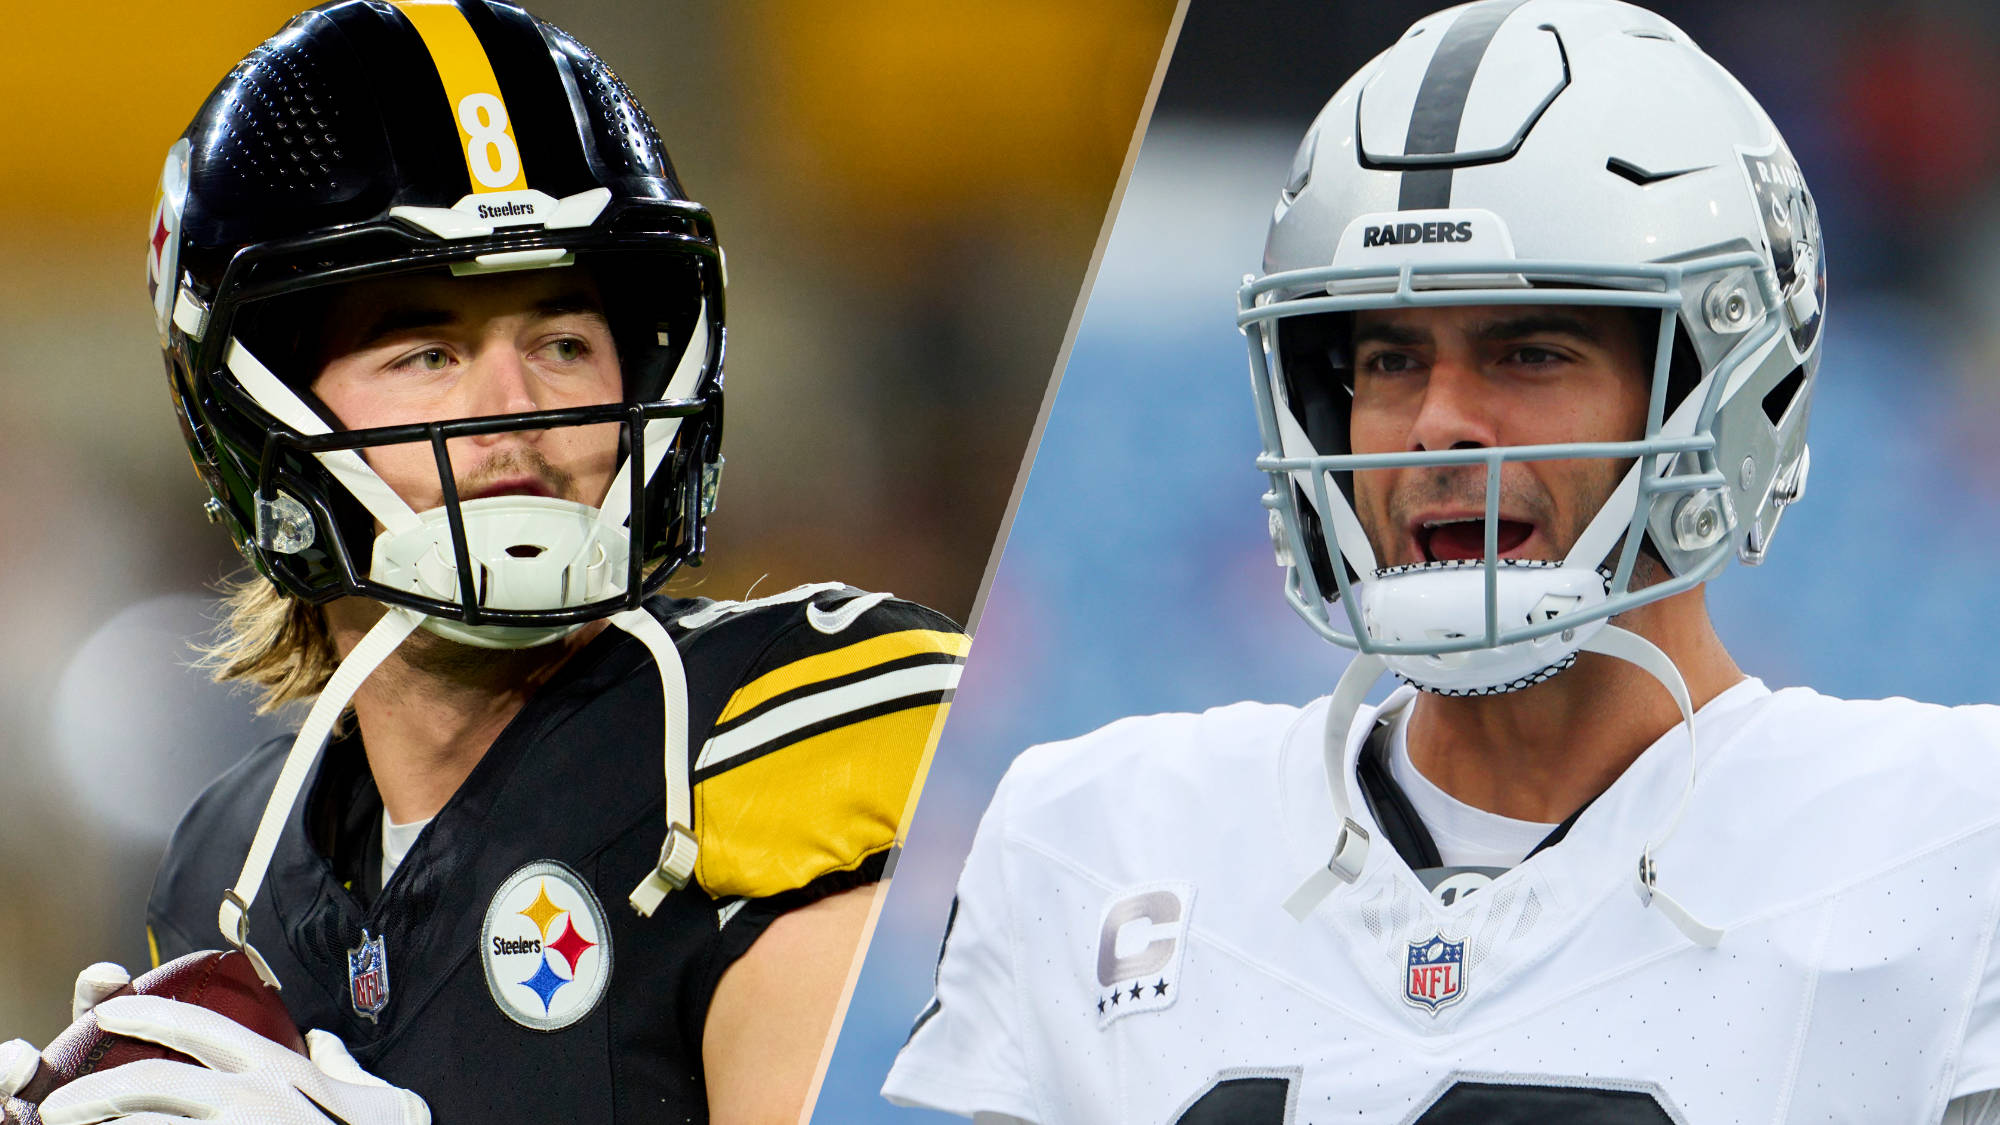 Steelers vs Raiders live stream: How to watch NFL Sunday Night